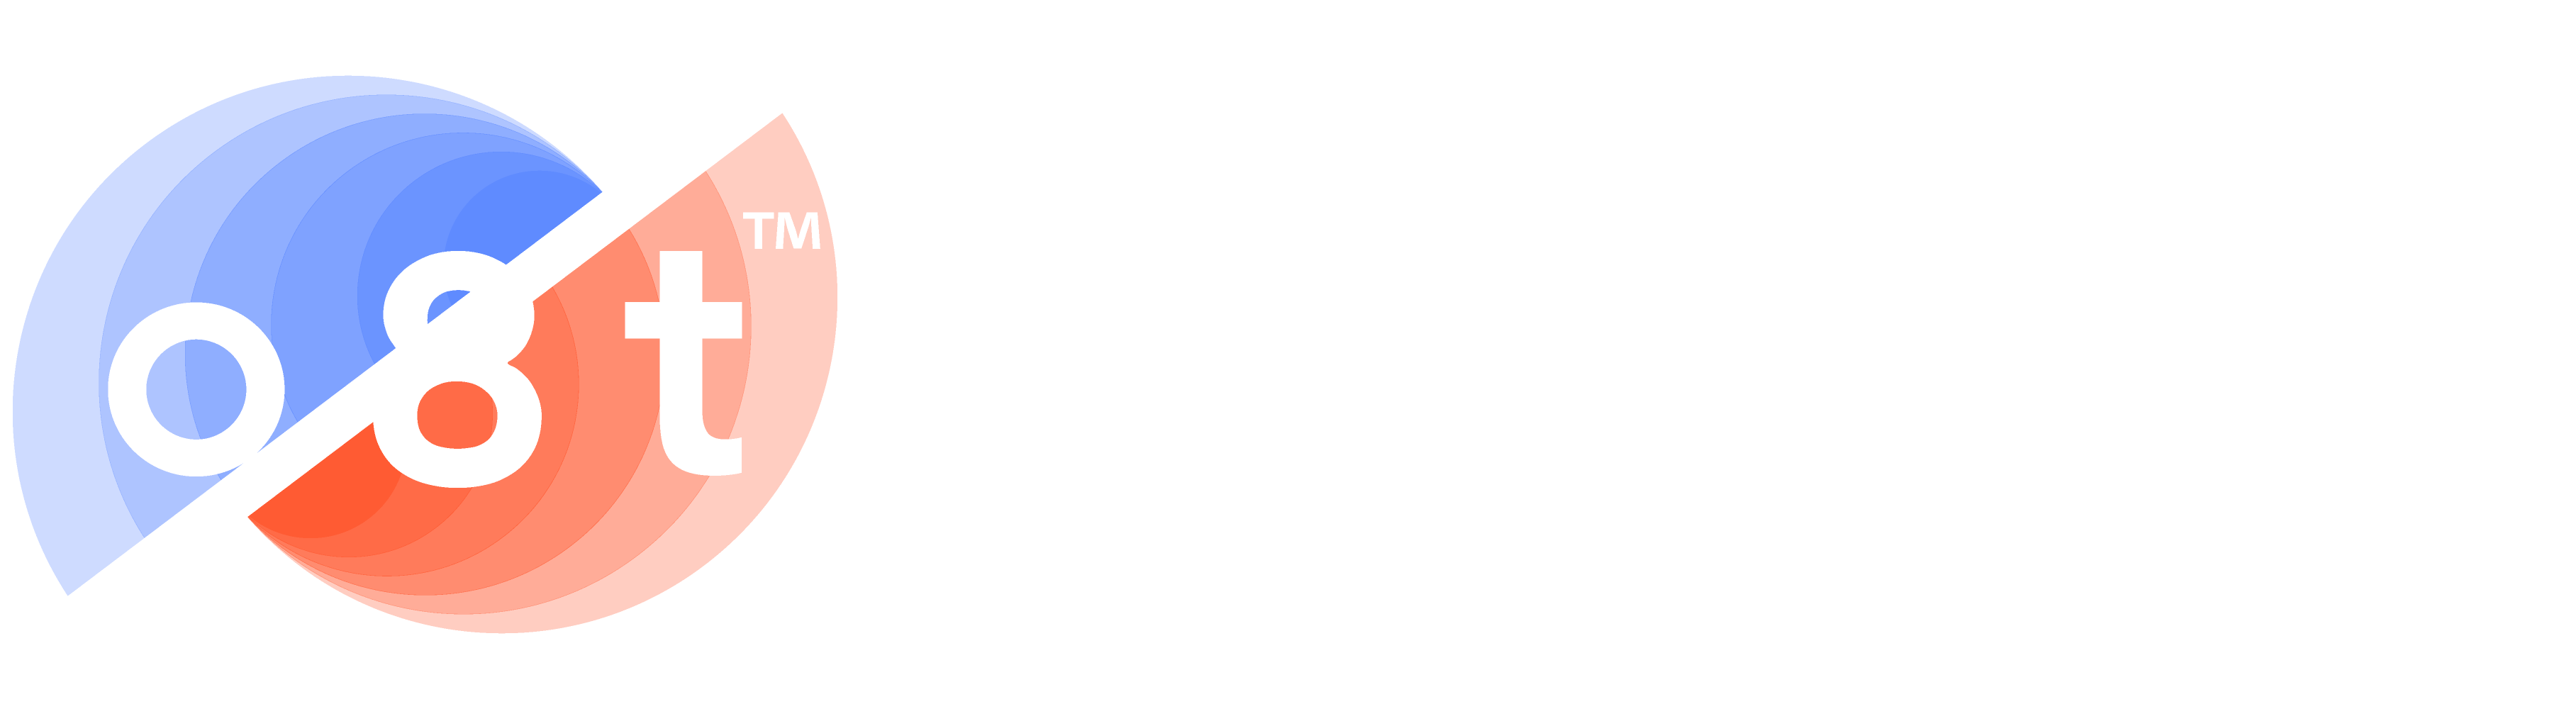 o8t_omniscient_Logo_RGB_Horizontal_MONO